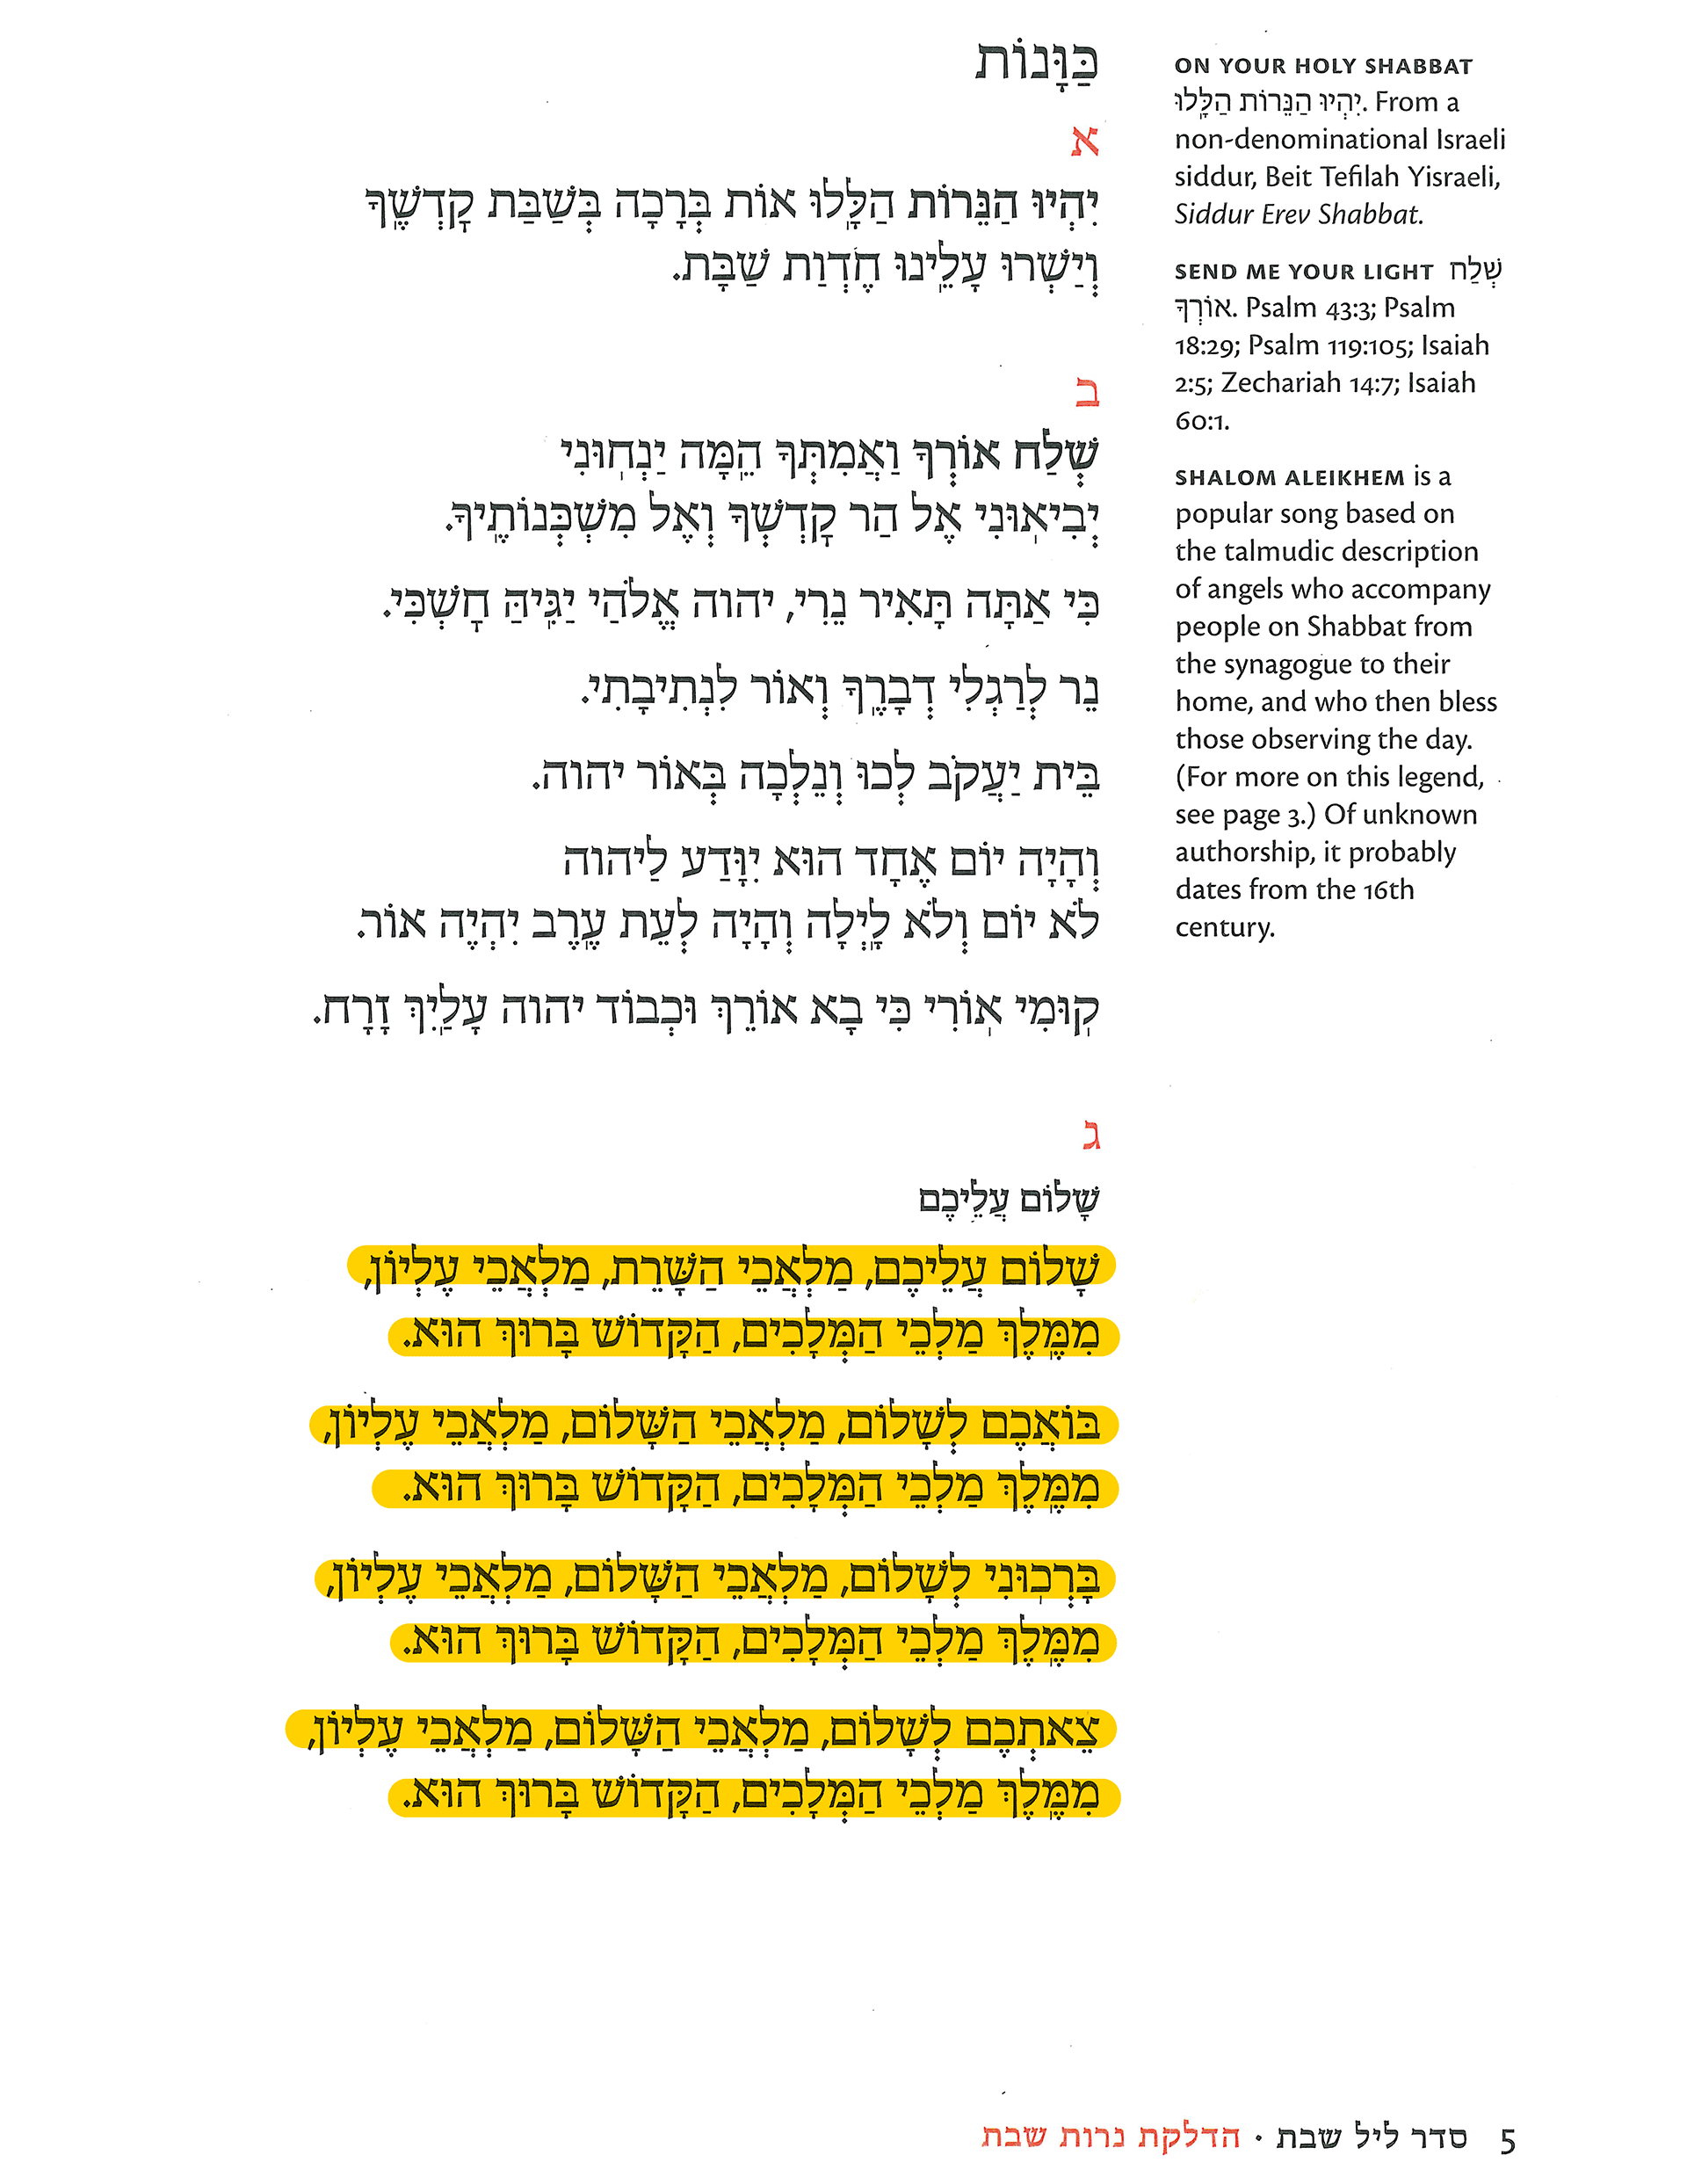 Page 5 Shalom Aleichem